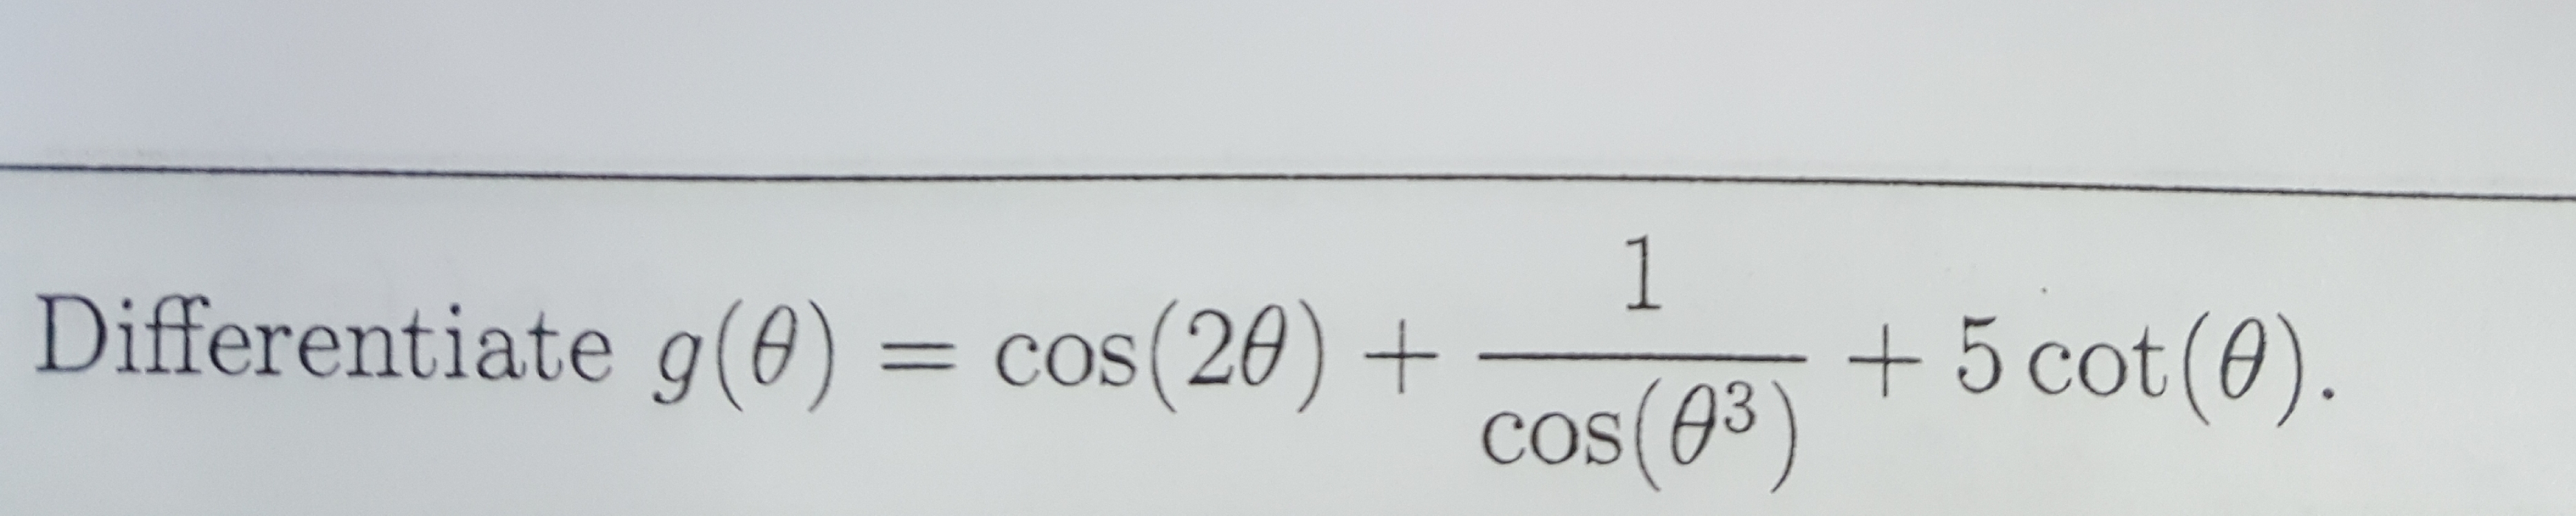 Differentiate g(0):
+ 5 cot(0).
cos(20) +
= COS
cos(03)
